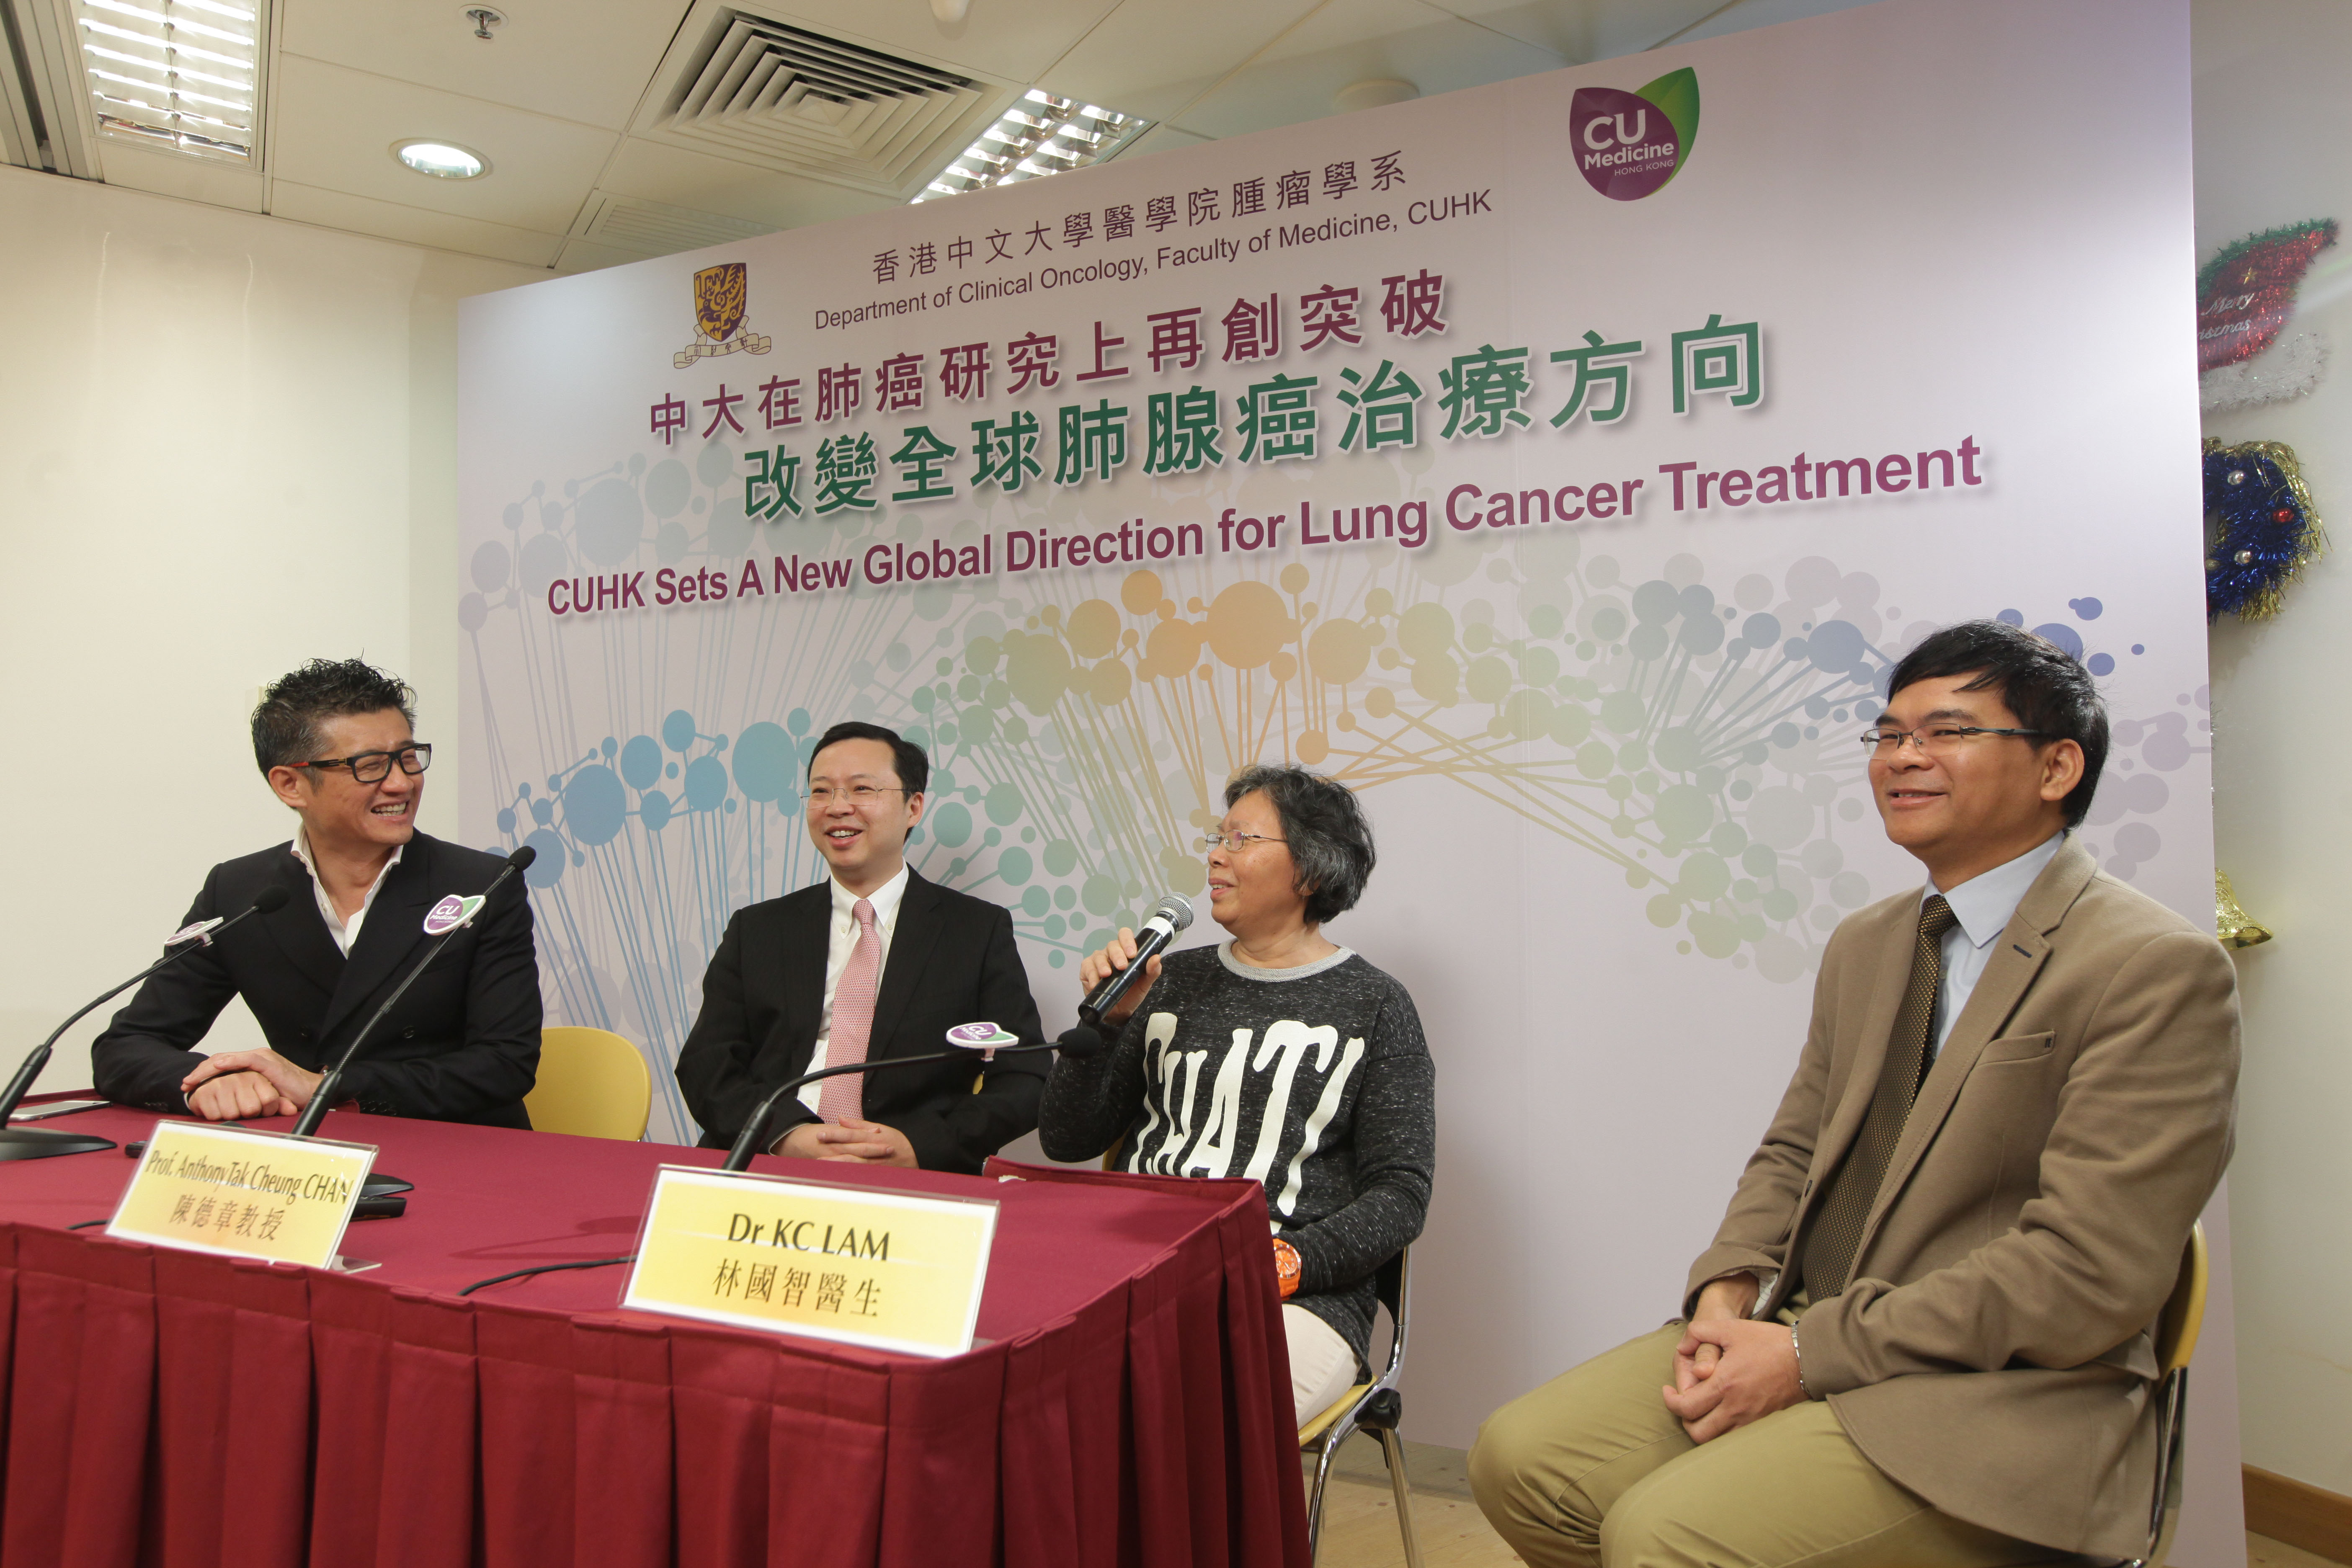 Ms. Chan, an ALK-positive lung cancer patient